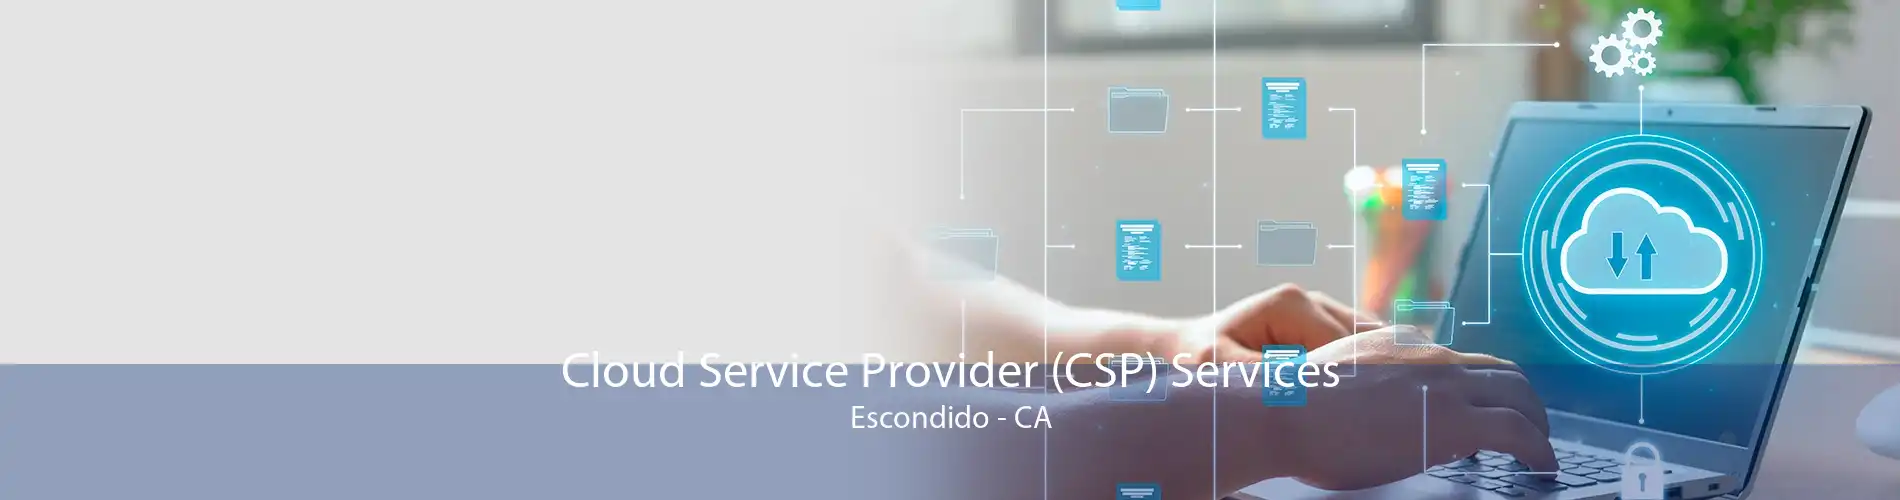 Cloud Service Provider (CSP) Services Escondido - CA